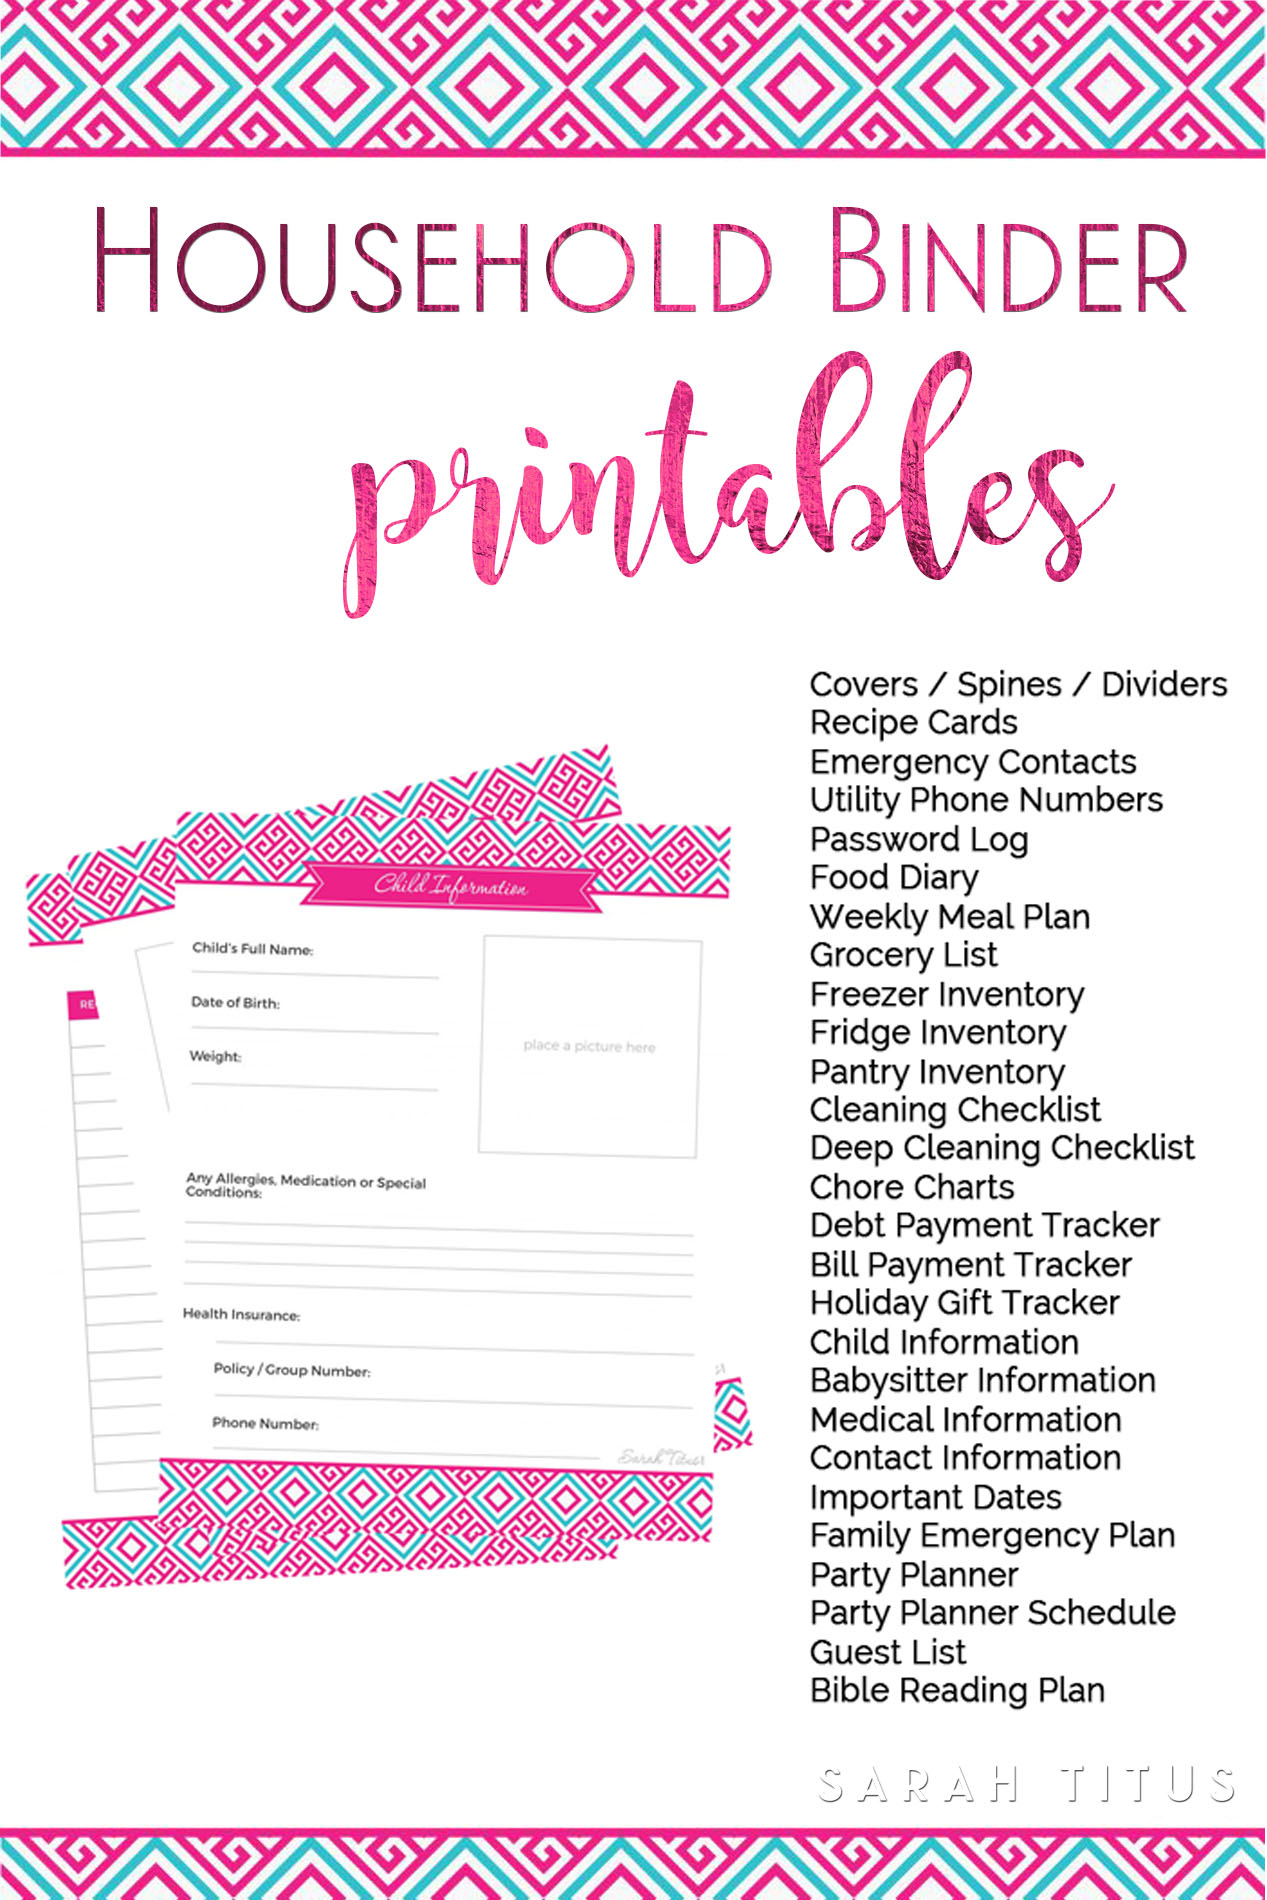 Household Binder Free Printables - Sarah Titus - Free Printable Household Binder